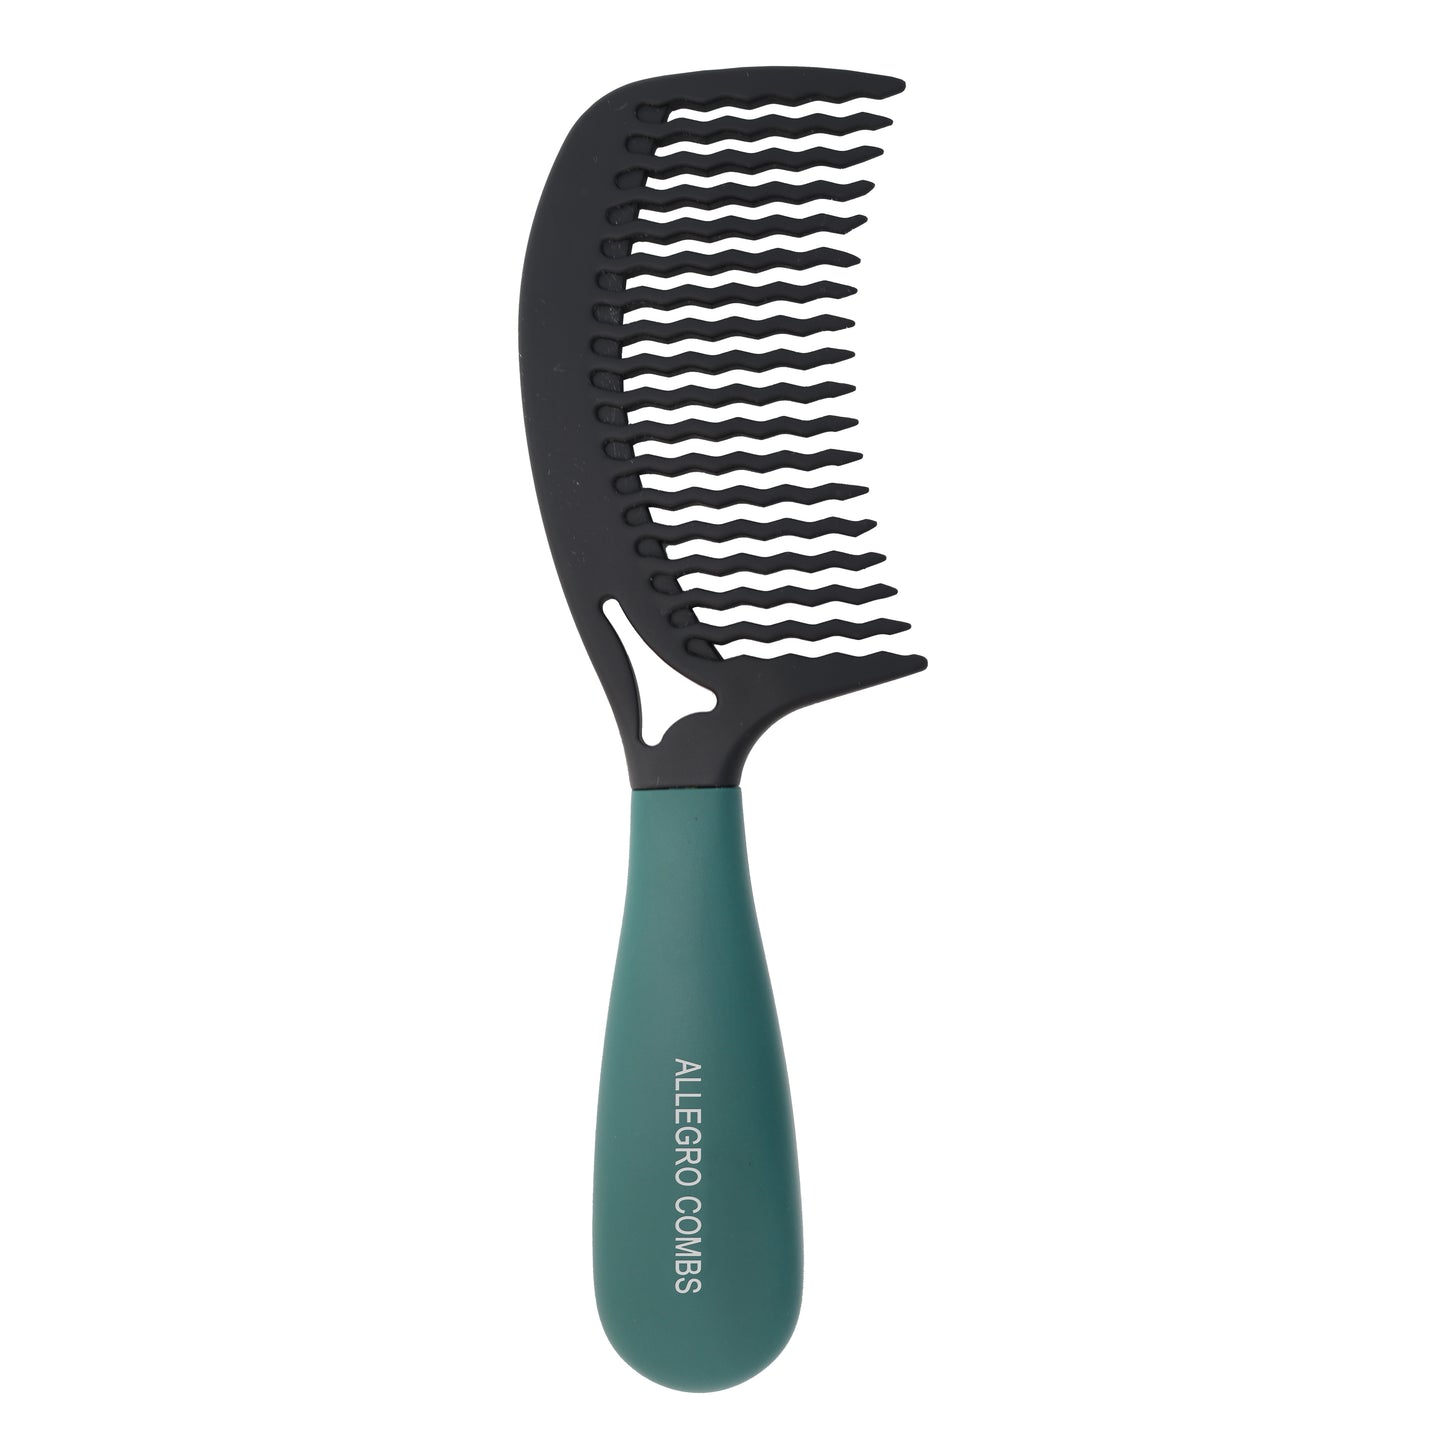 Allegro Gripforte Wide Wavy Tooth Comb - Wavy & Curly Hair Detangler for Women & Men